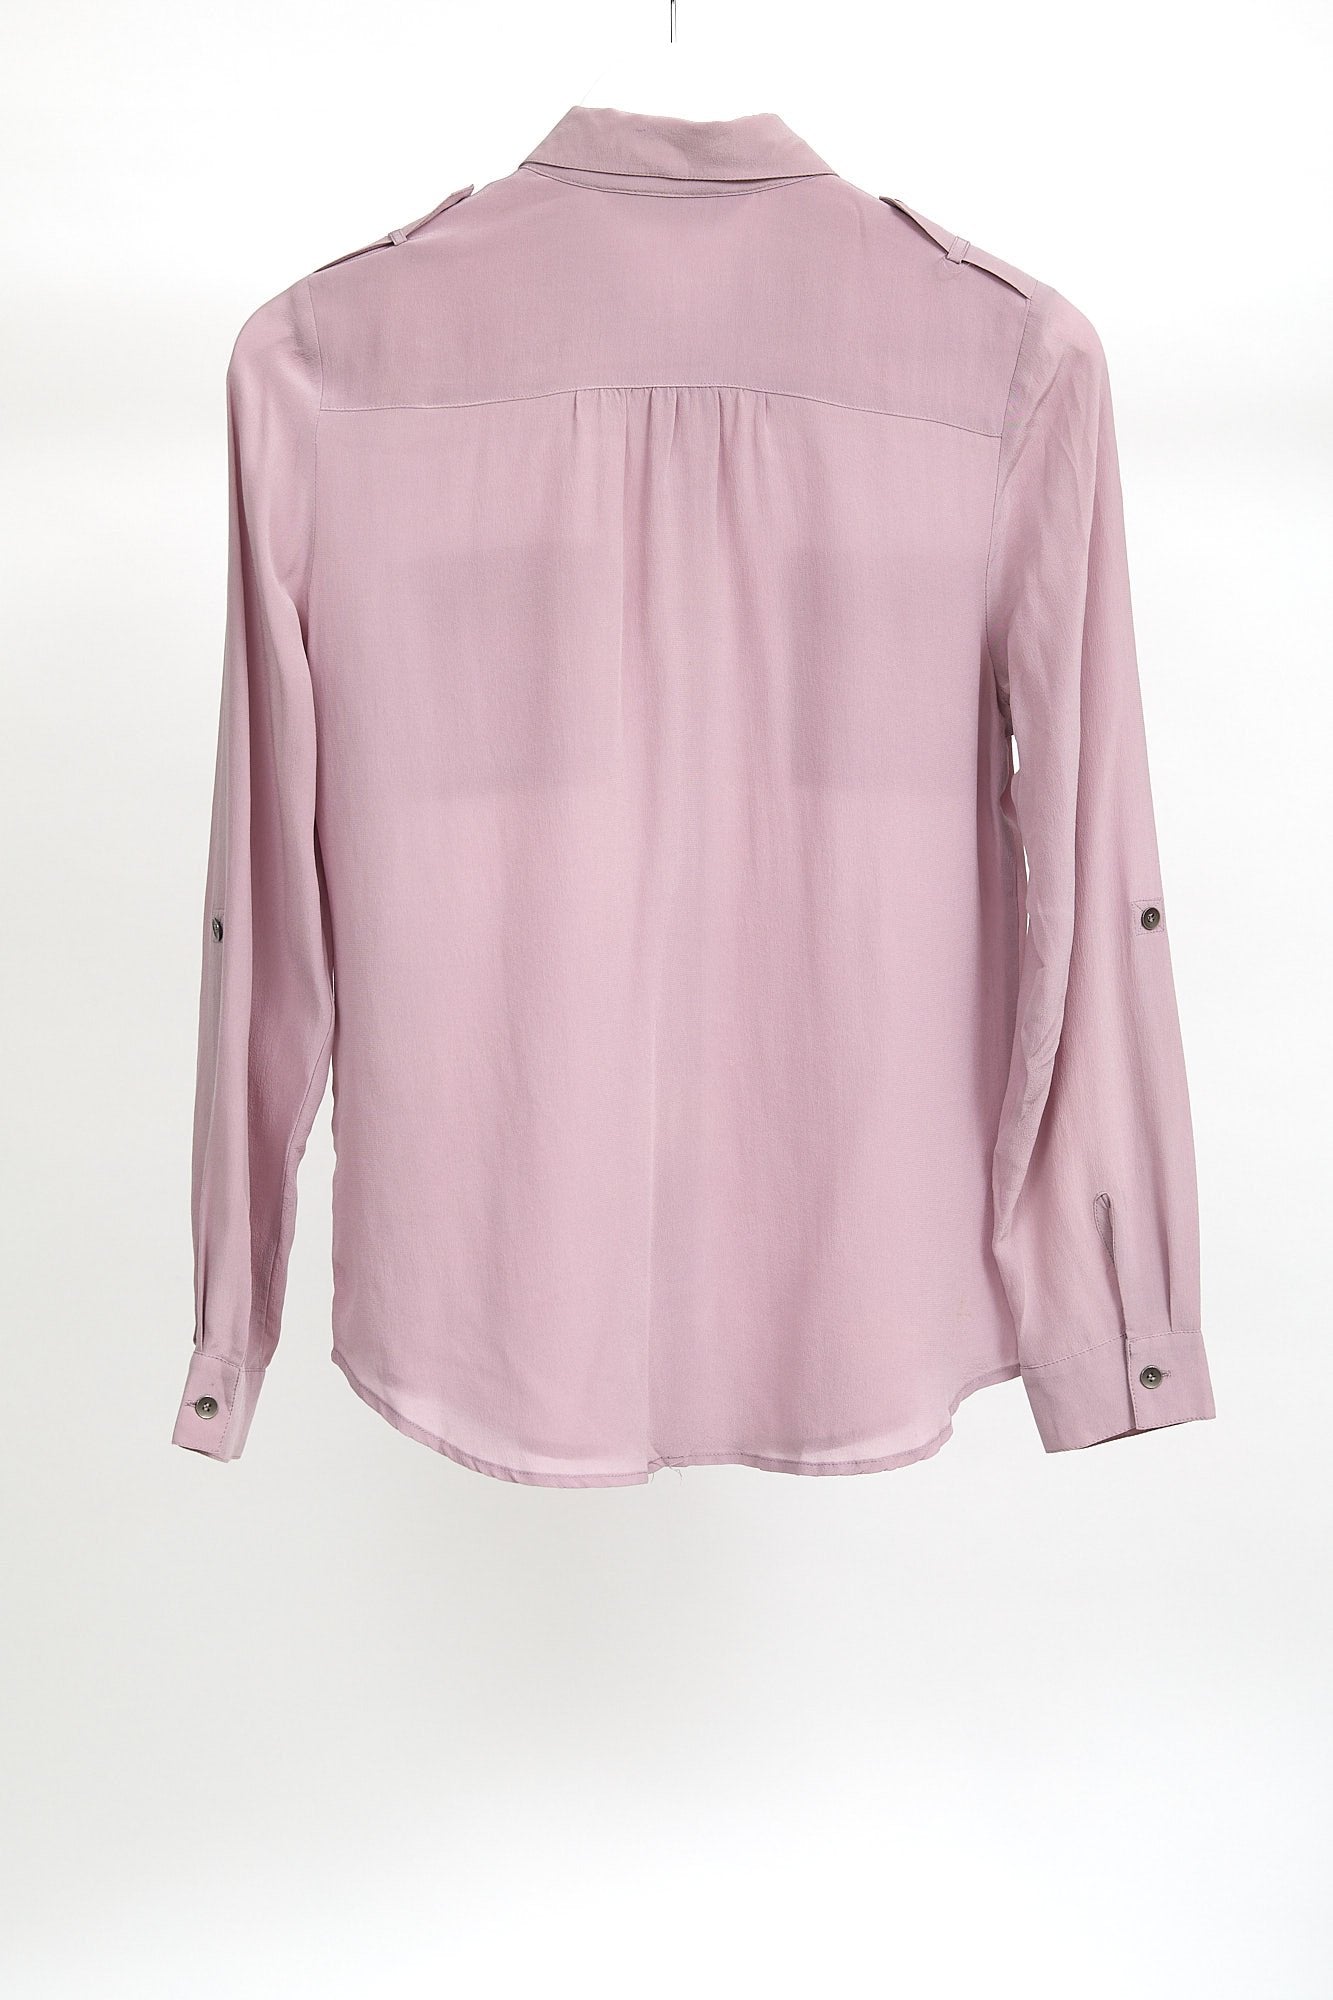 Womens Pink Silk John Lewis Shirt: Size 10 or Small